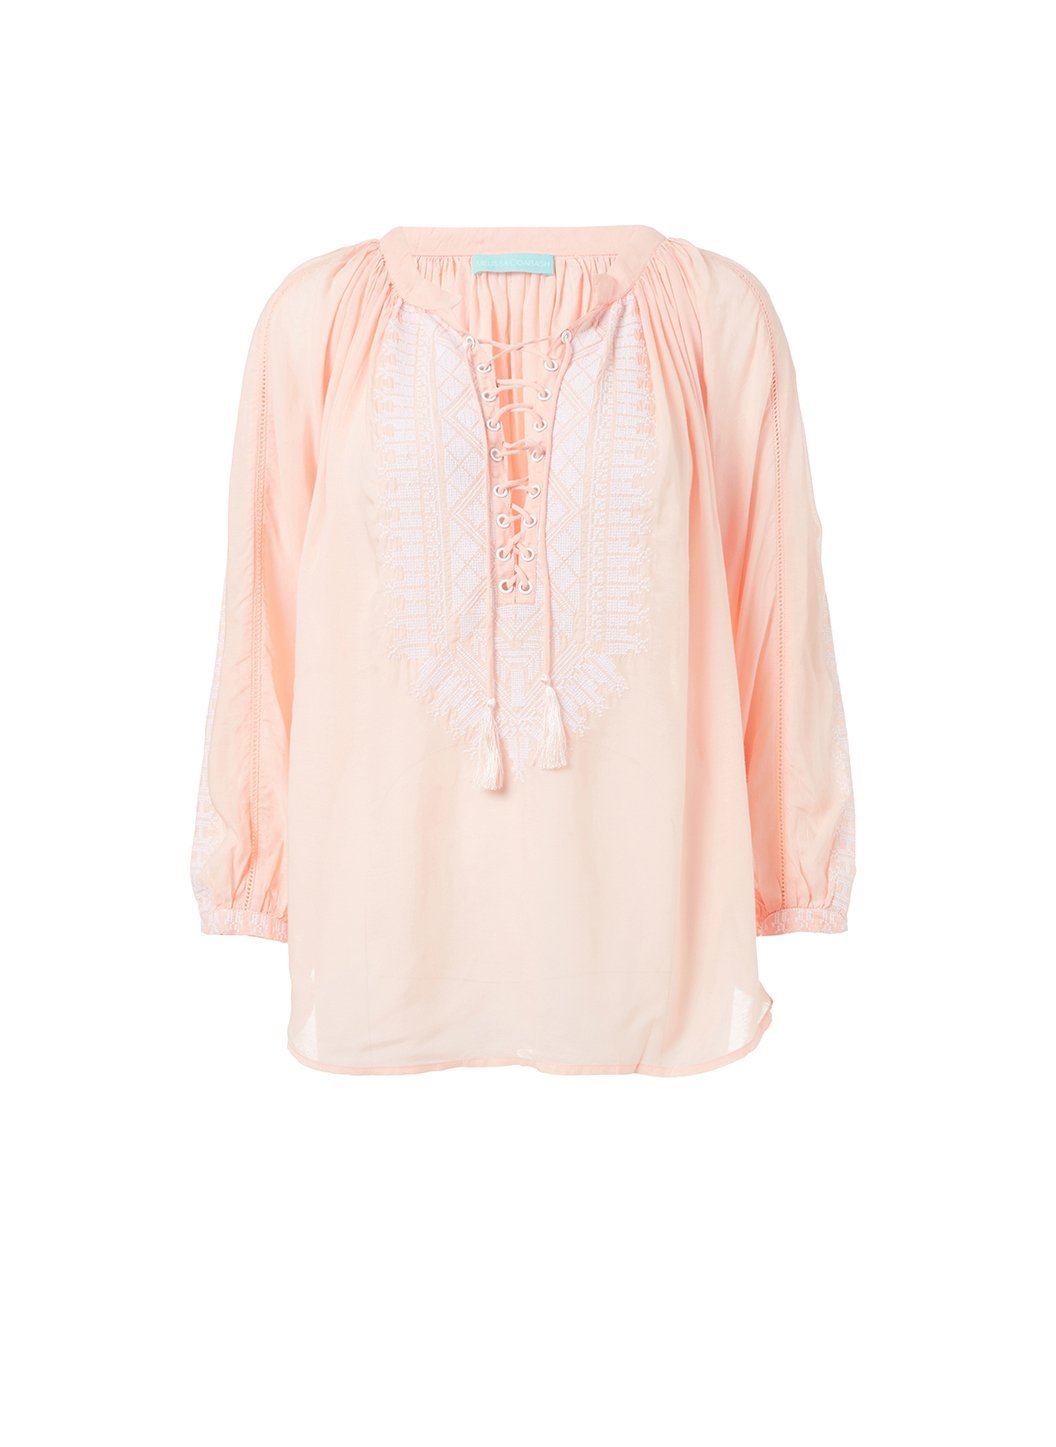 simona peach white laceup embroidered blouse 2019